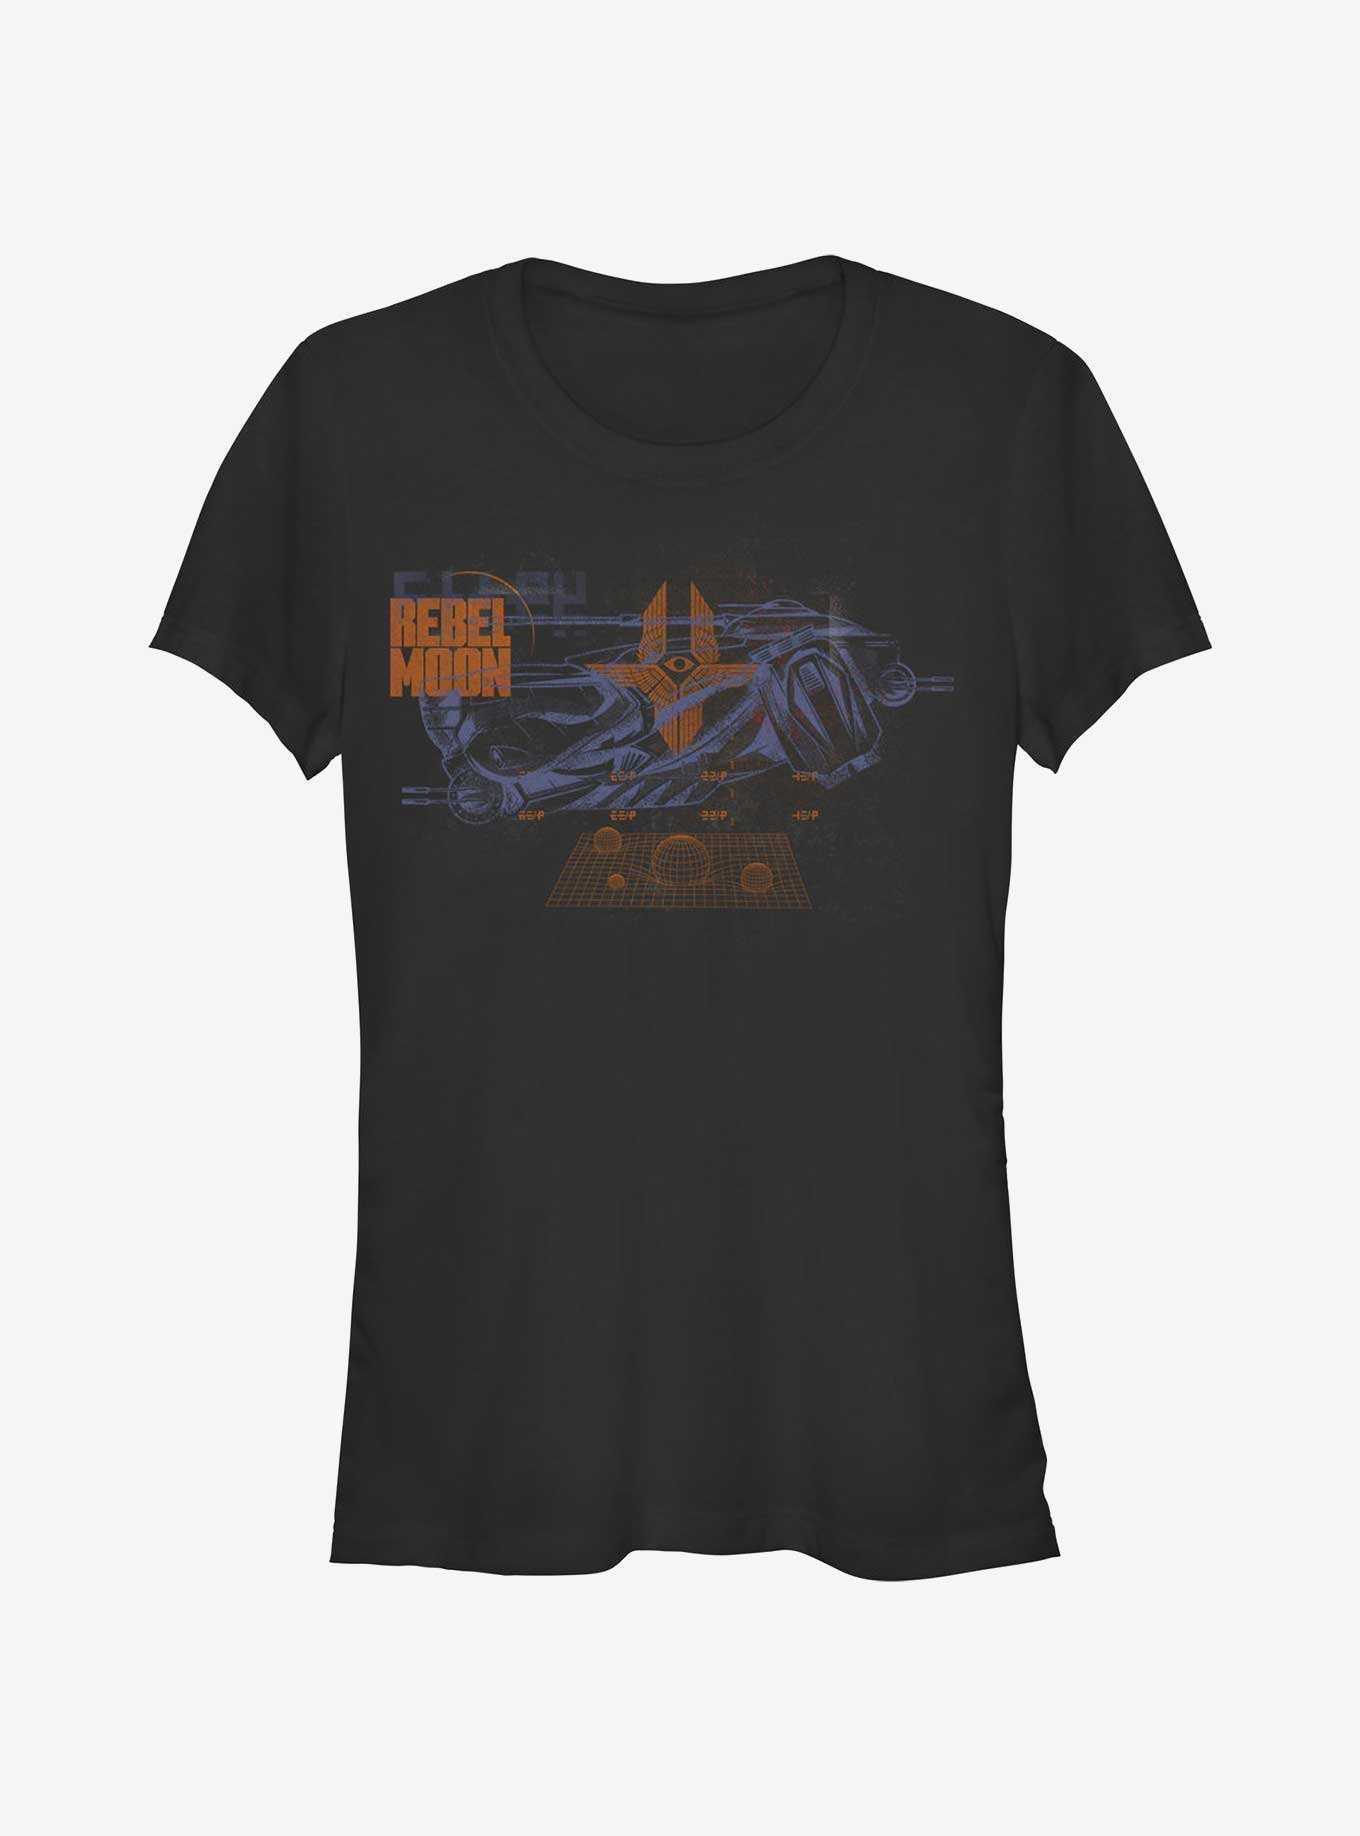 Rebel Moon Imperium Fighter Diagram Girls T-Shirt, , hi-res